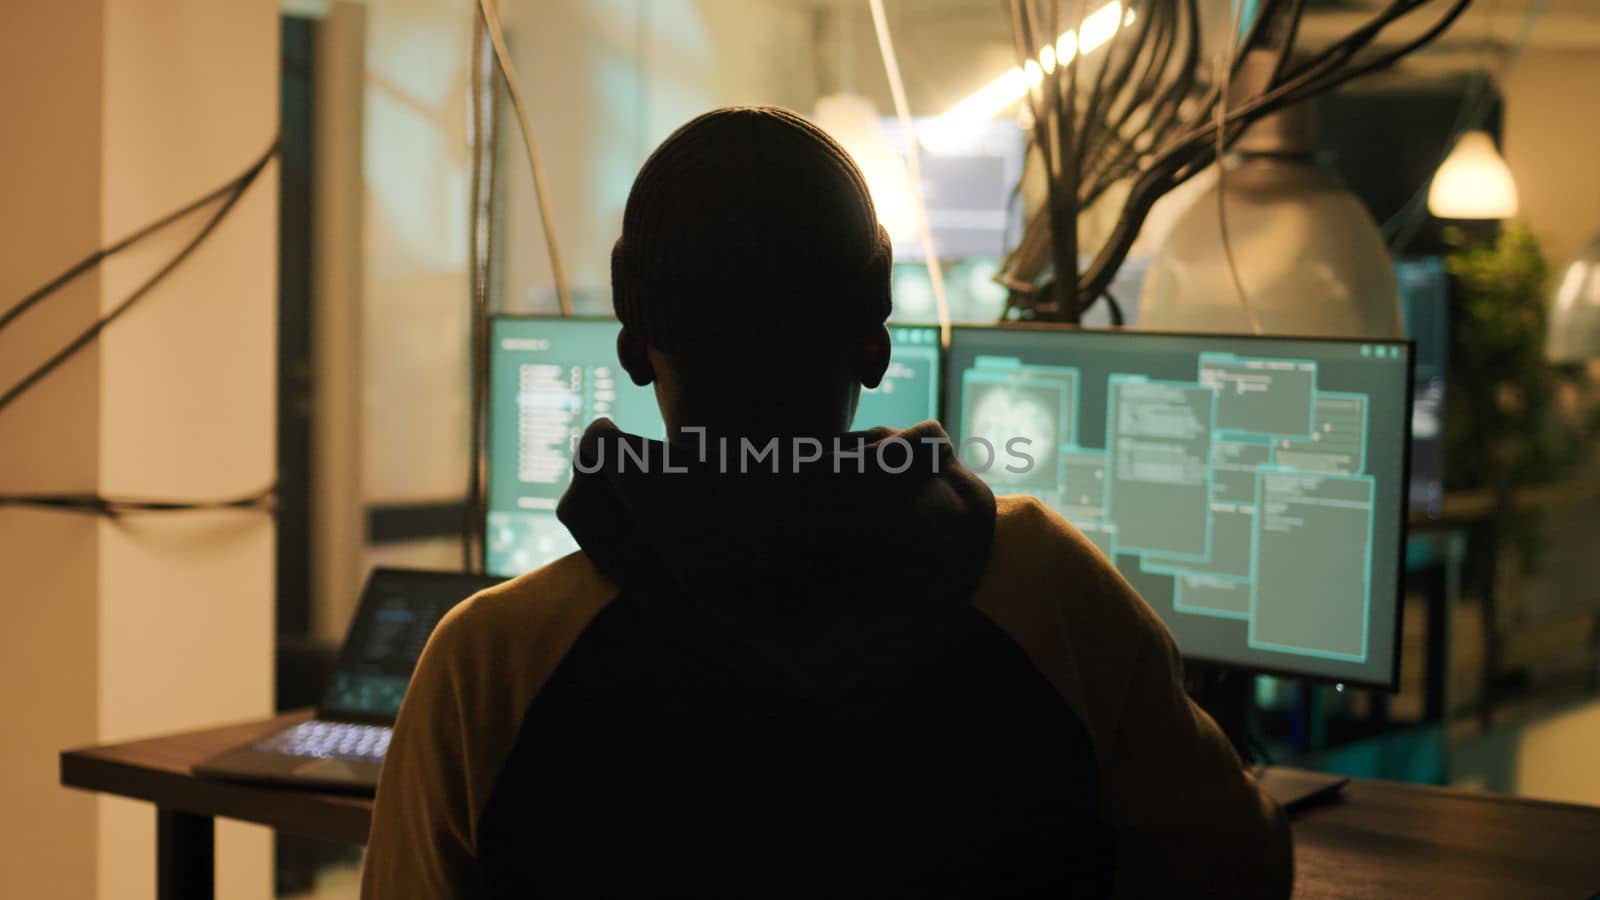 Silhouette of male hacker breaking firewall encryption to plant trojan virus by DCStudio